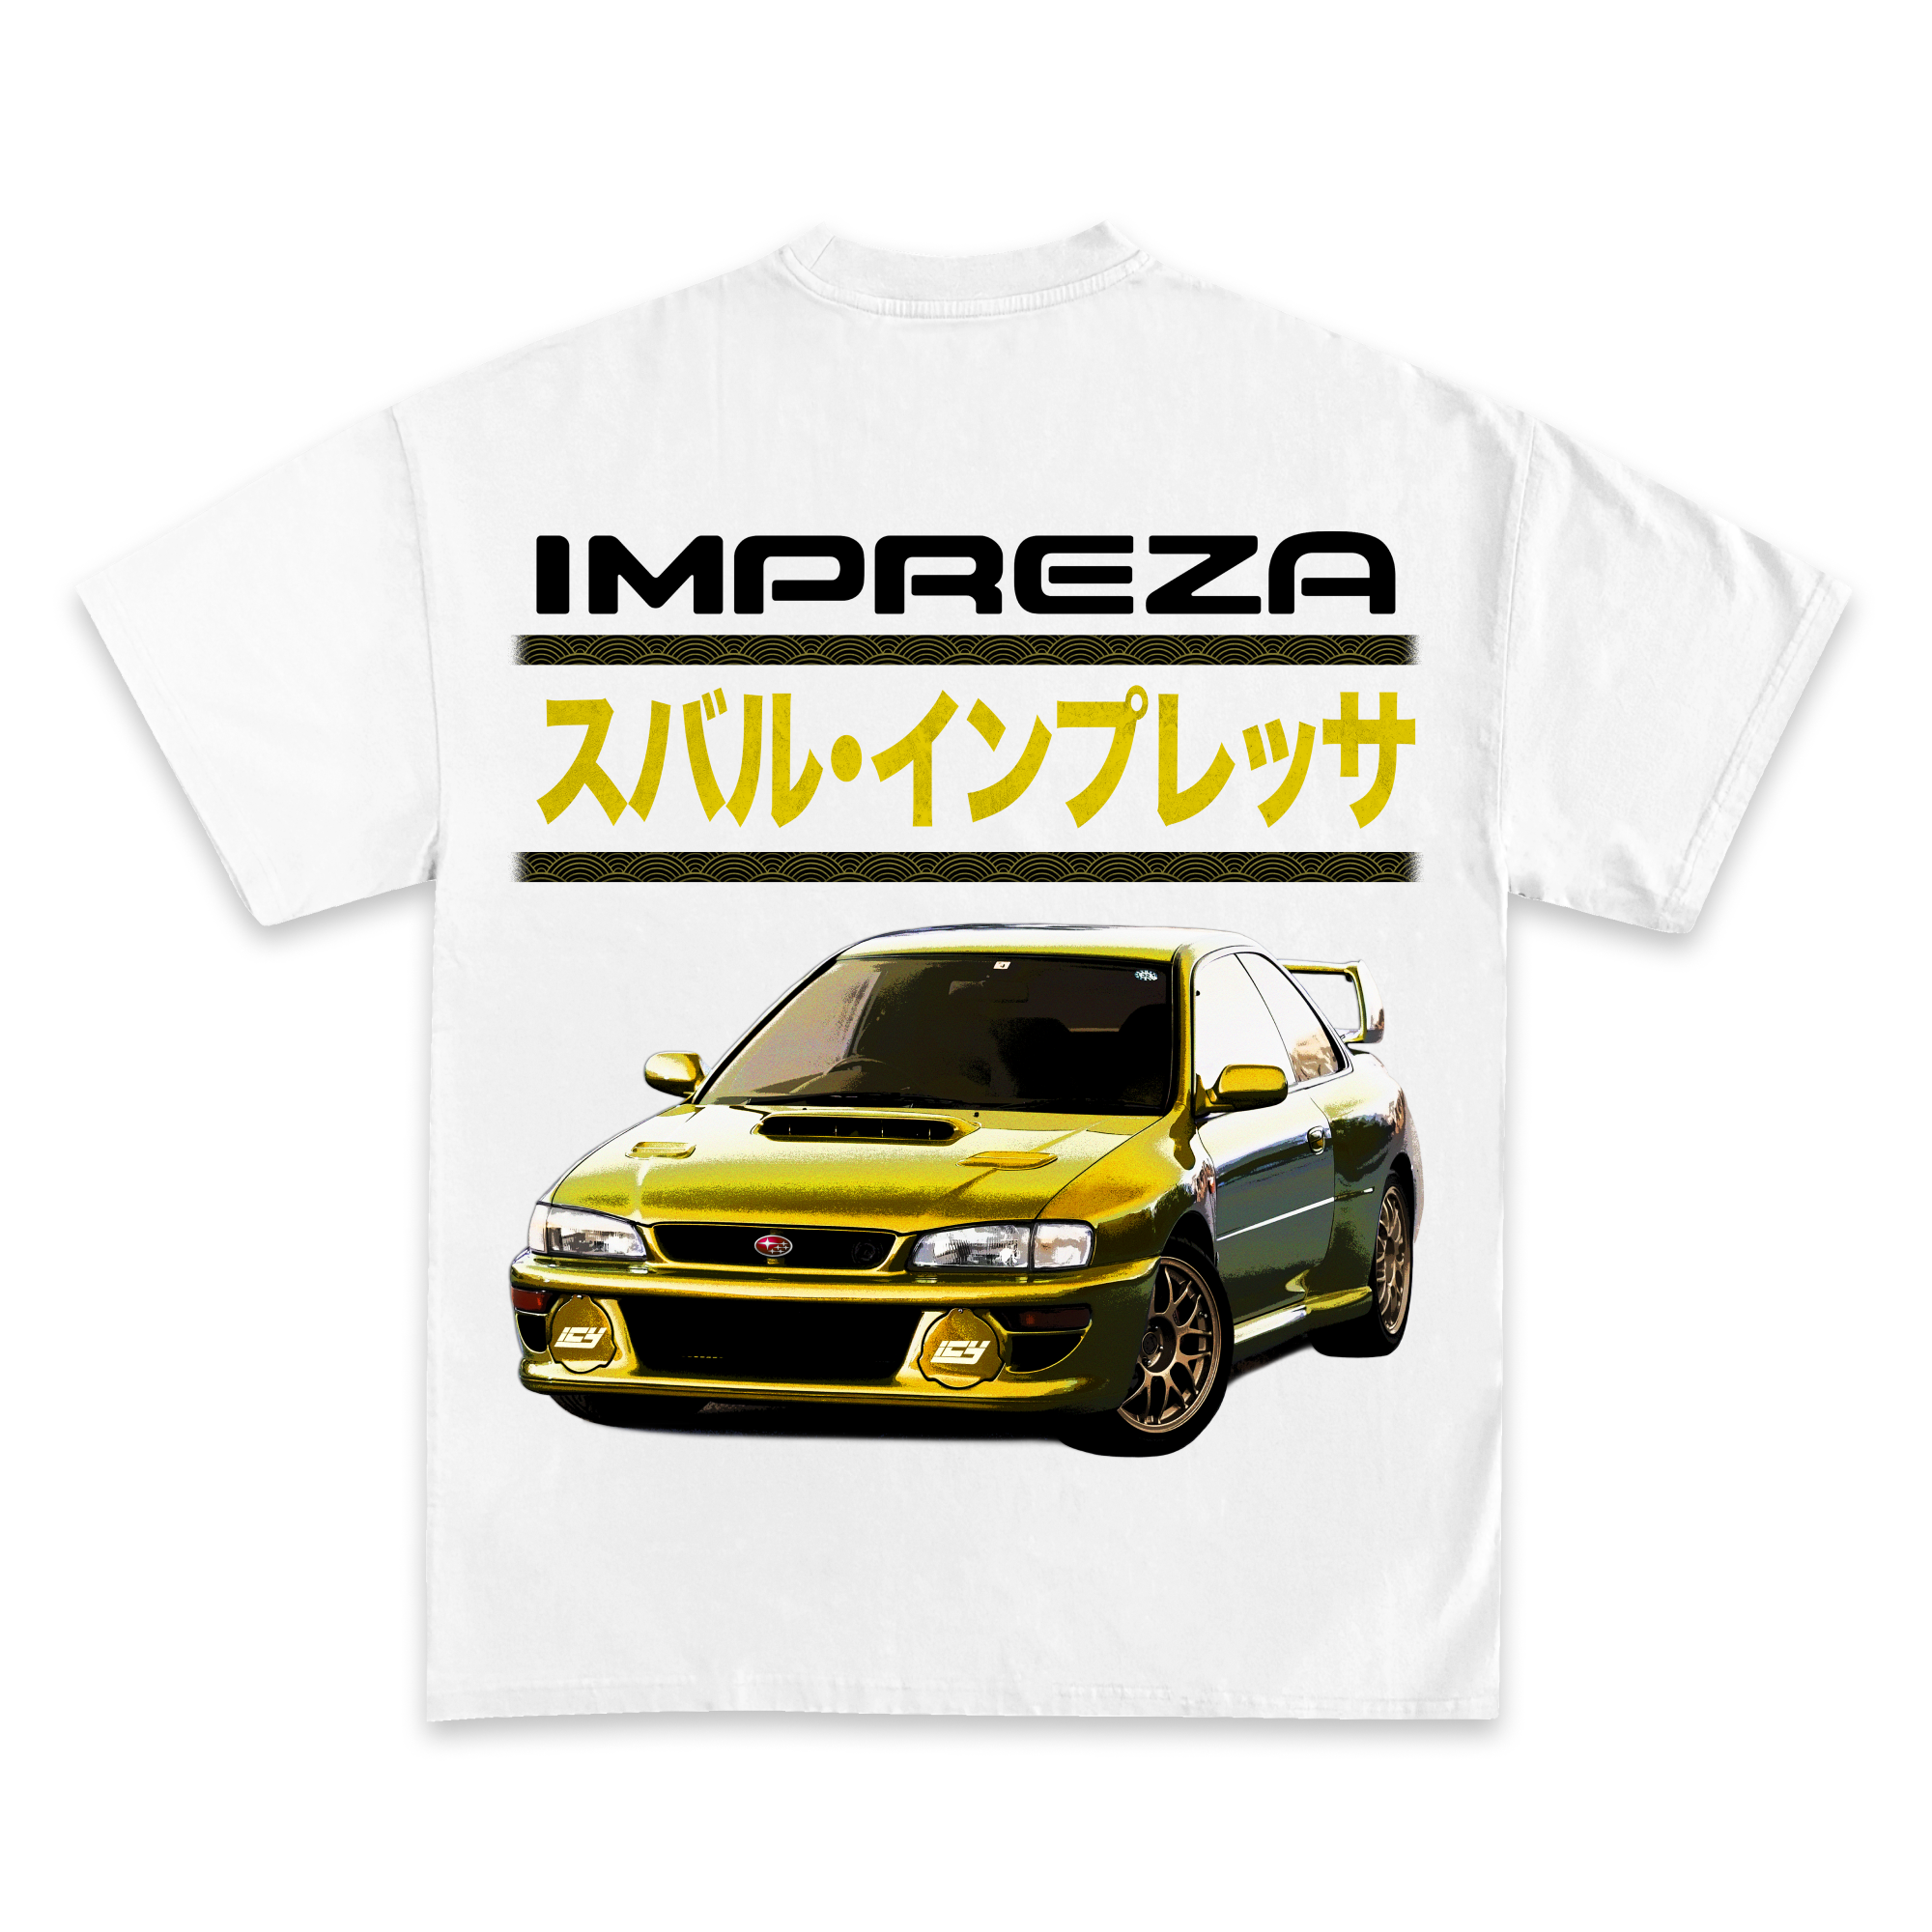 Subaru Impreza JDM Racing Graphic T-Shirt